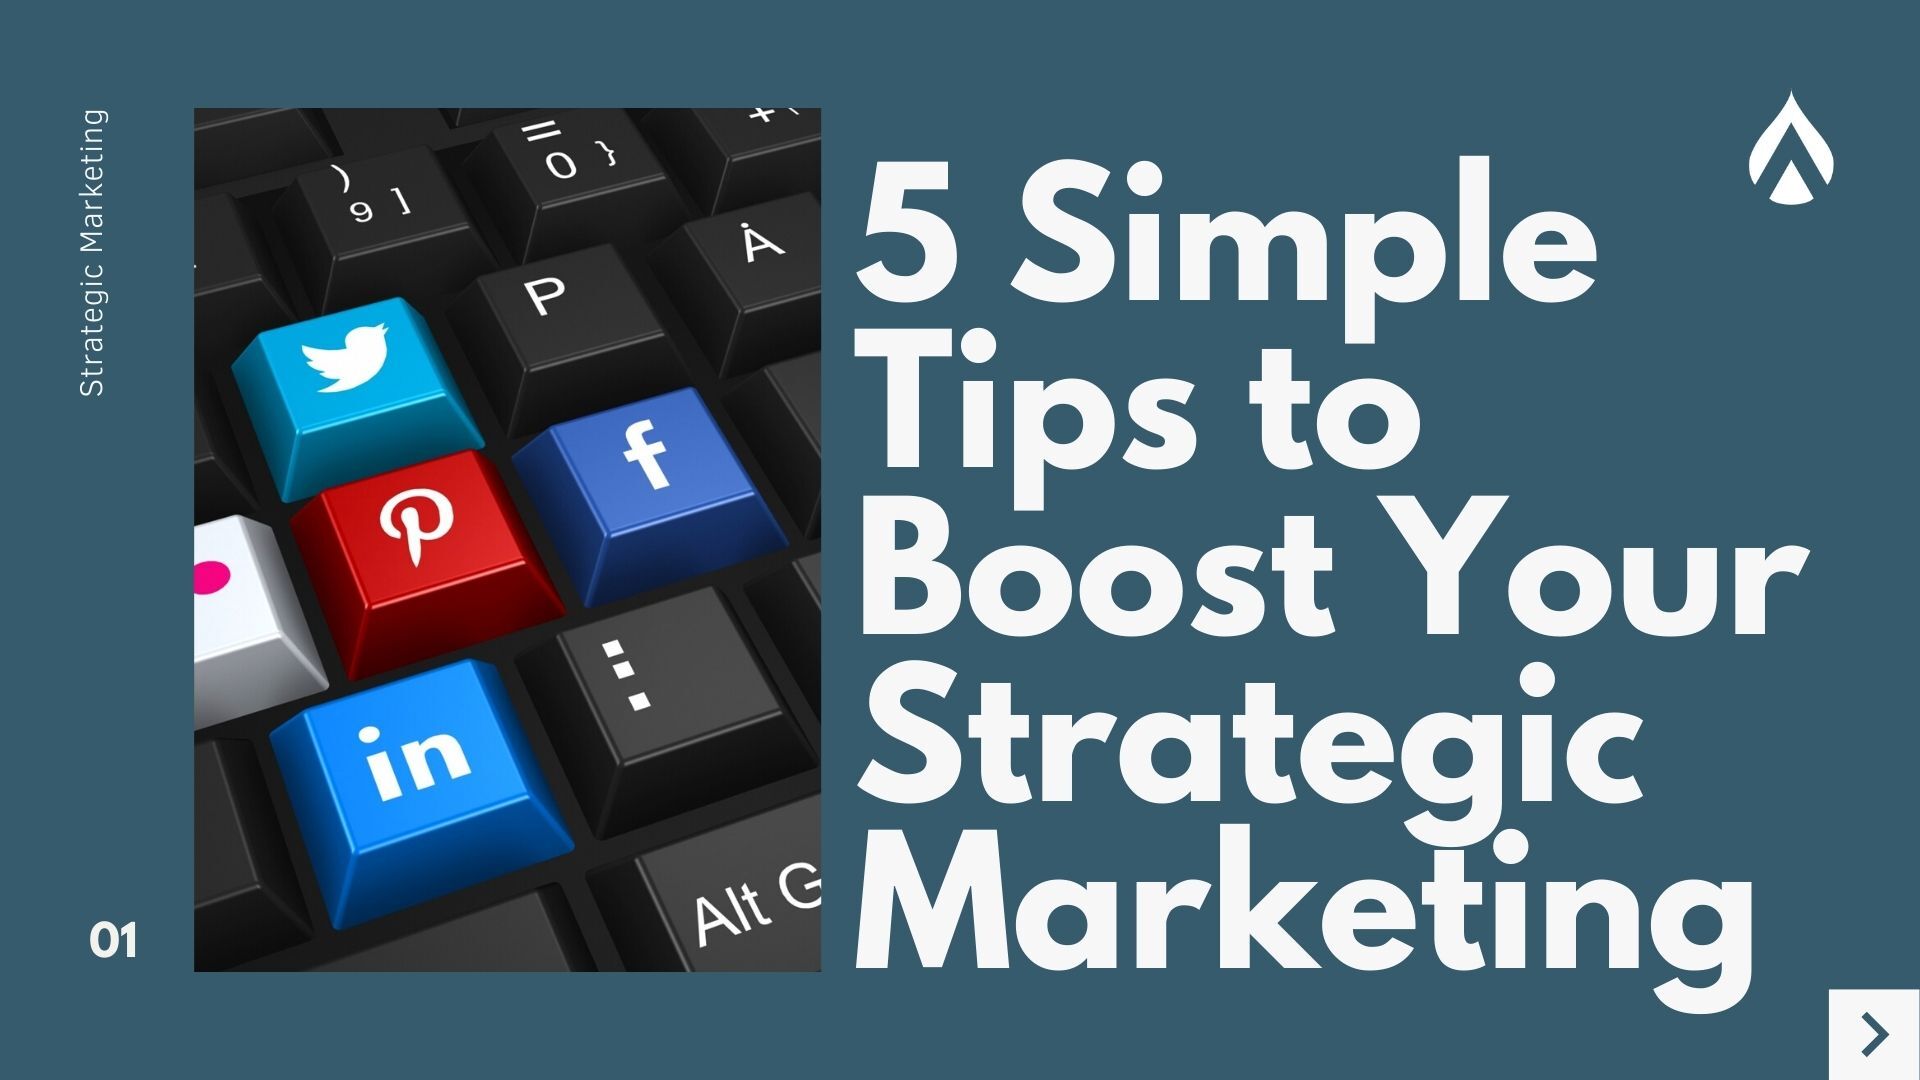 strategic marketing tips featured